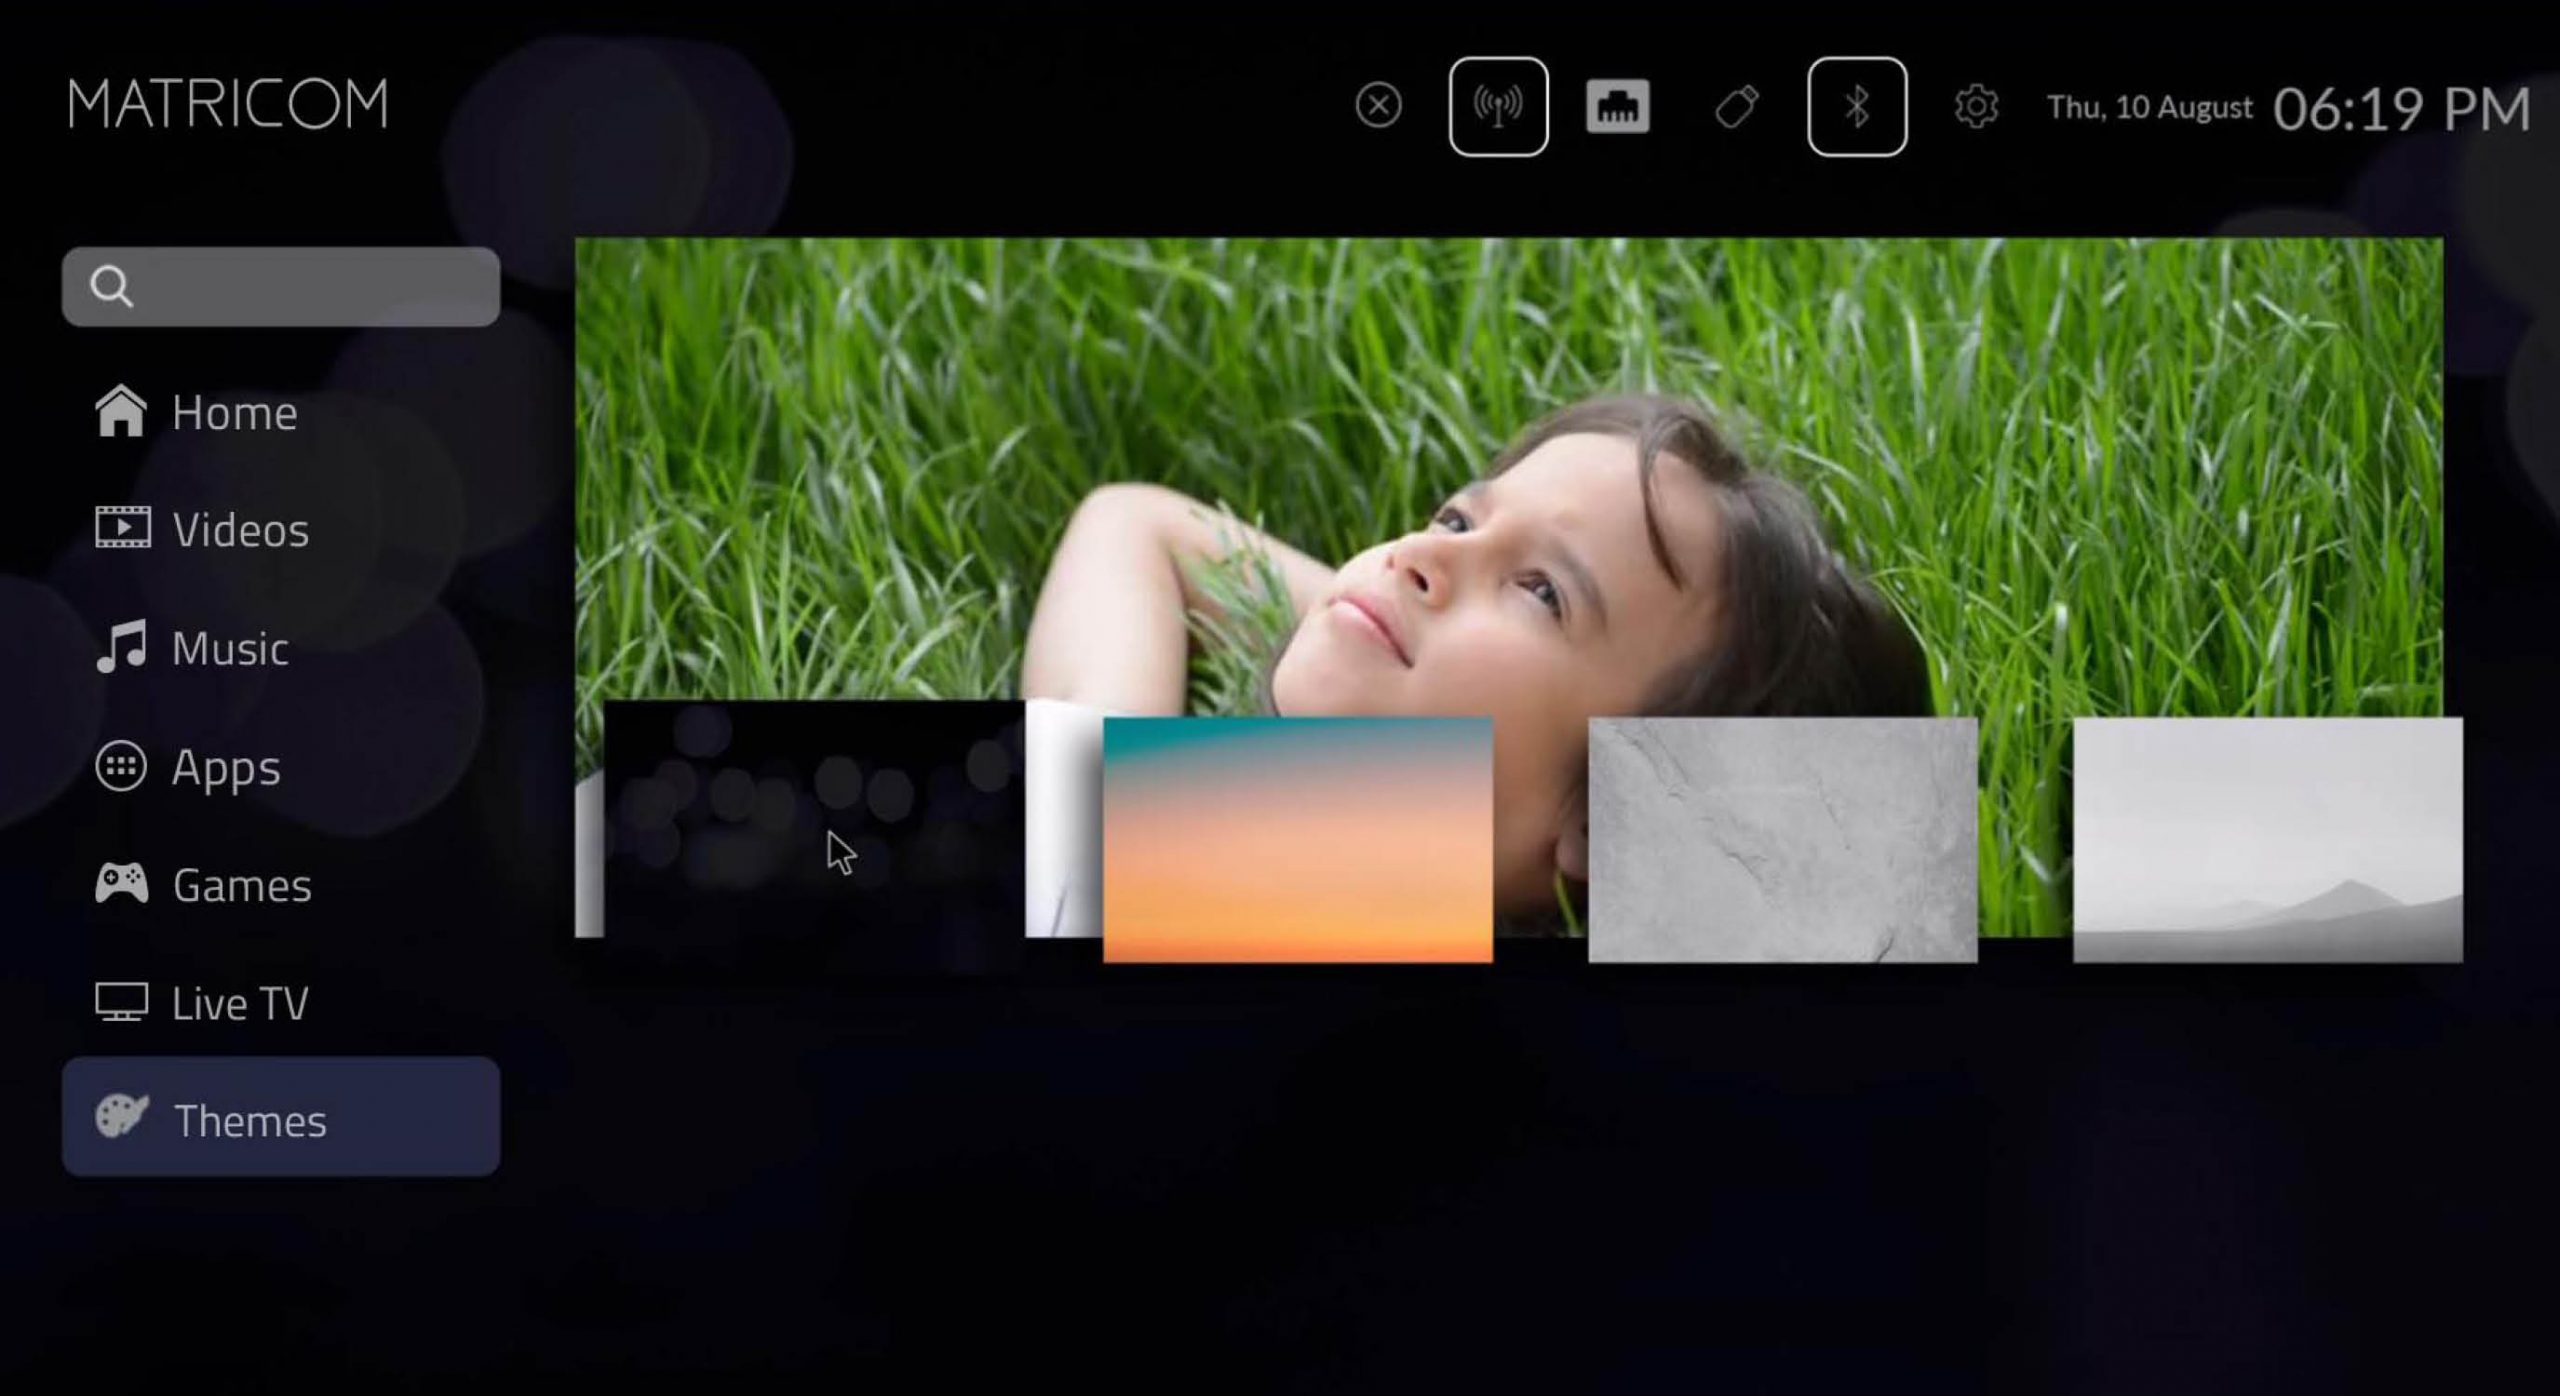 EVOLVEO Android BOX Q3 4K Netzwerk-Media-Player: Tests